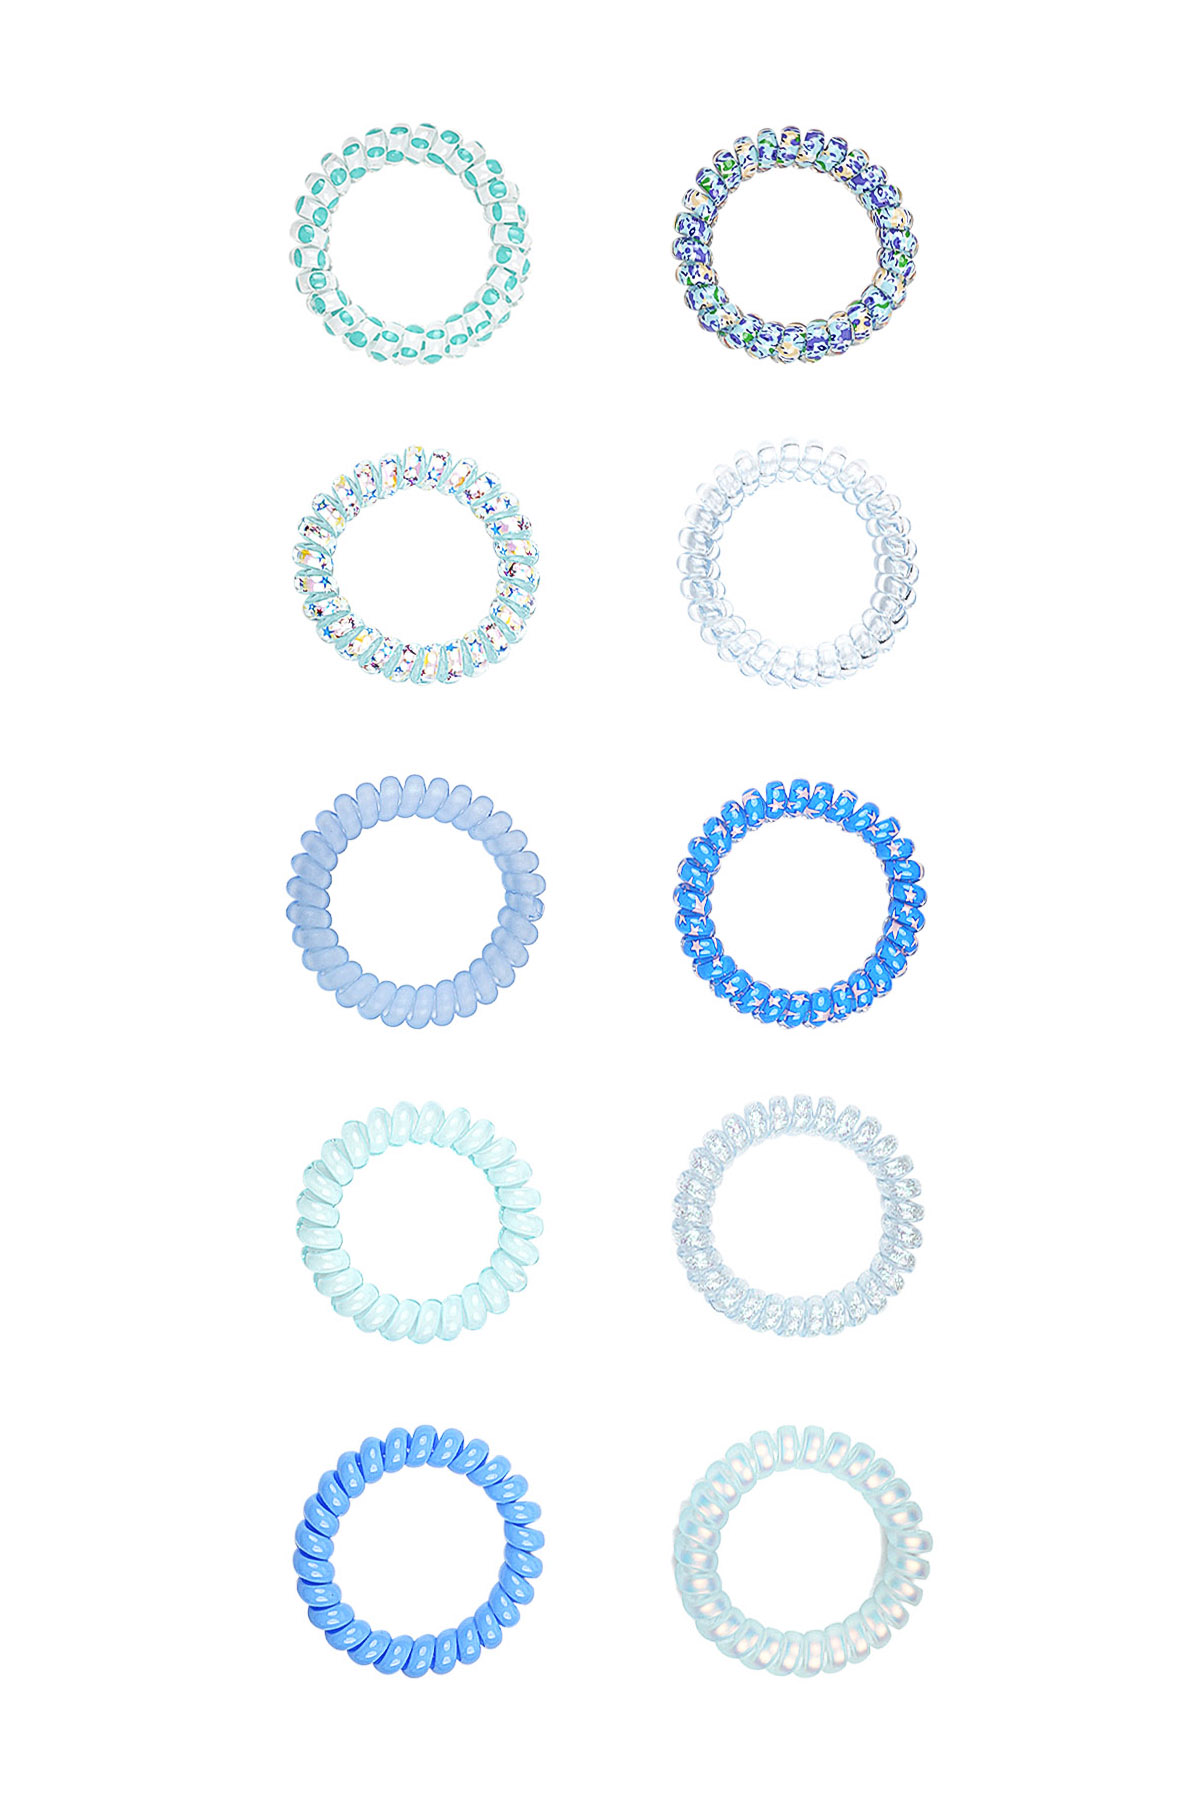 Twist rubber bands/bracelets - blue